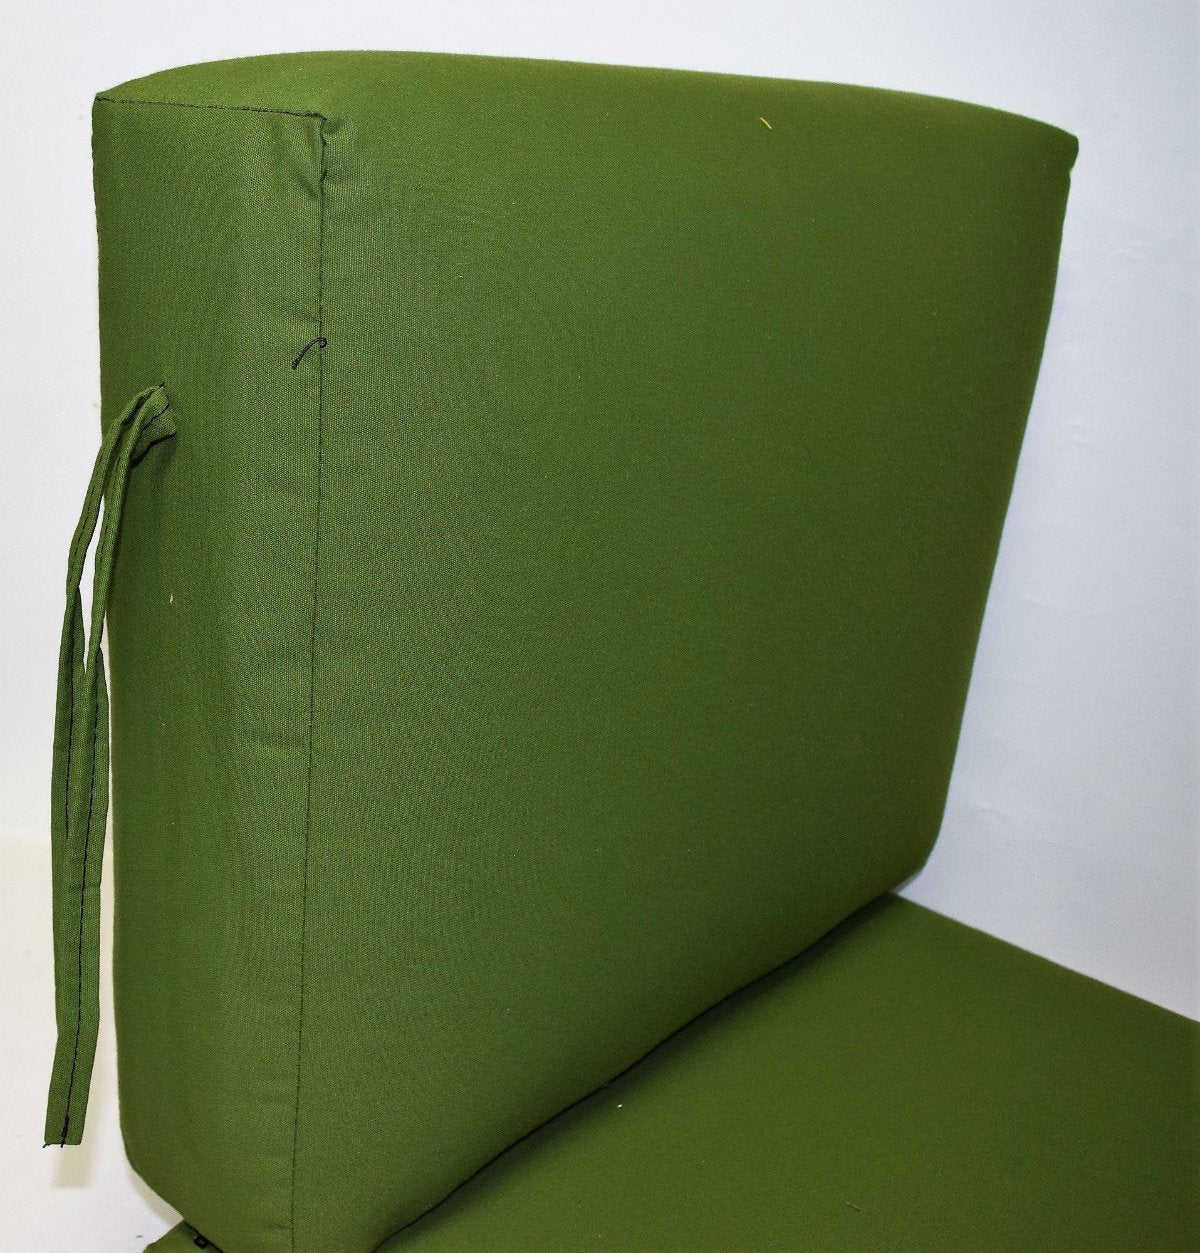 2 piece 24 wide x 26 deep seat x 20 high back in Epic Sunbrella Fabrics $329.99 -4"thick